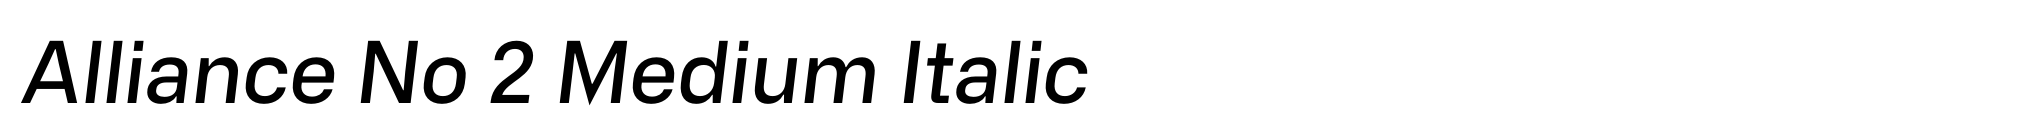 Alliance No 2 Medium Italic image